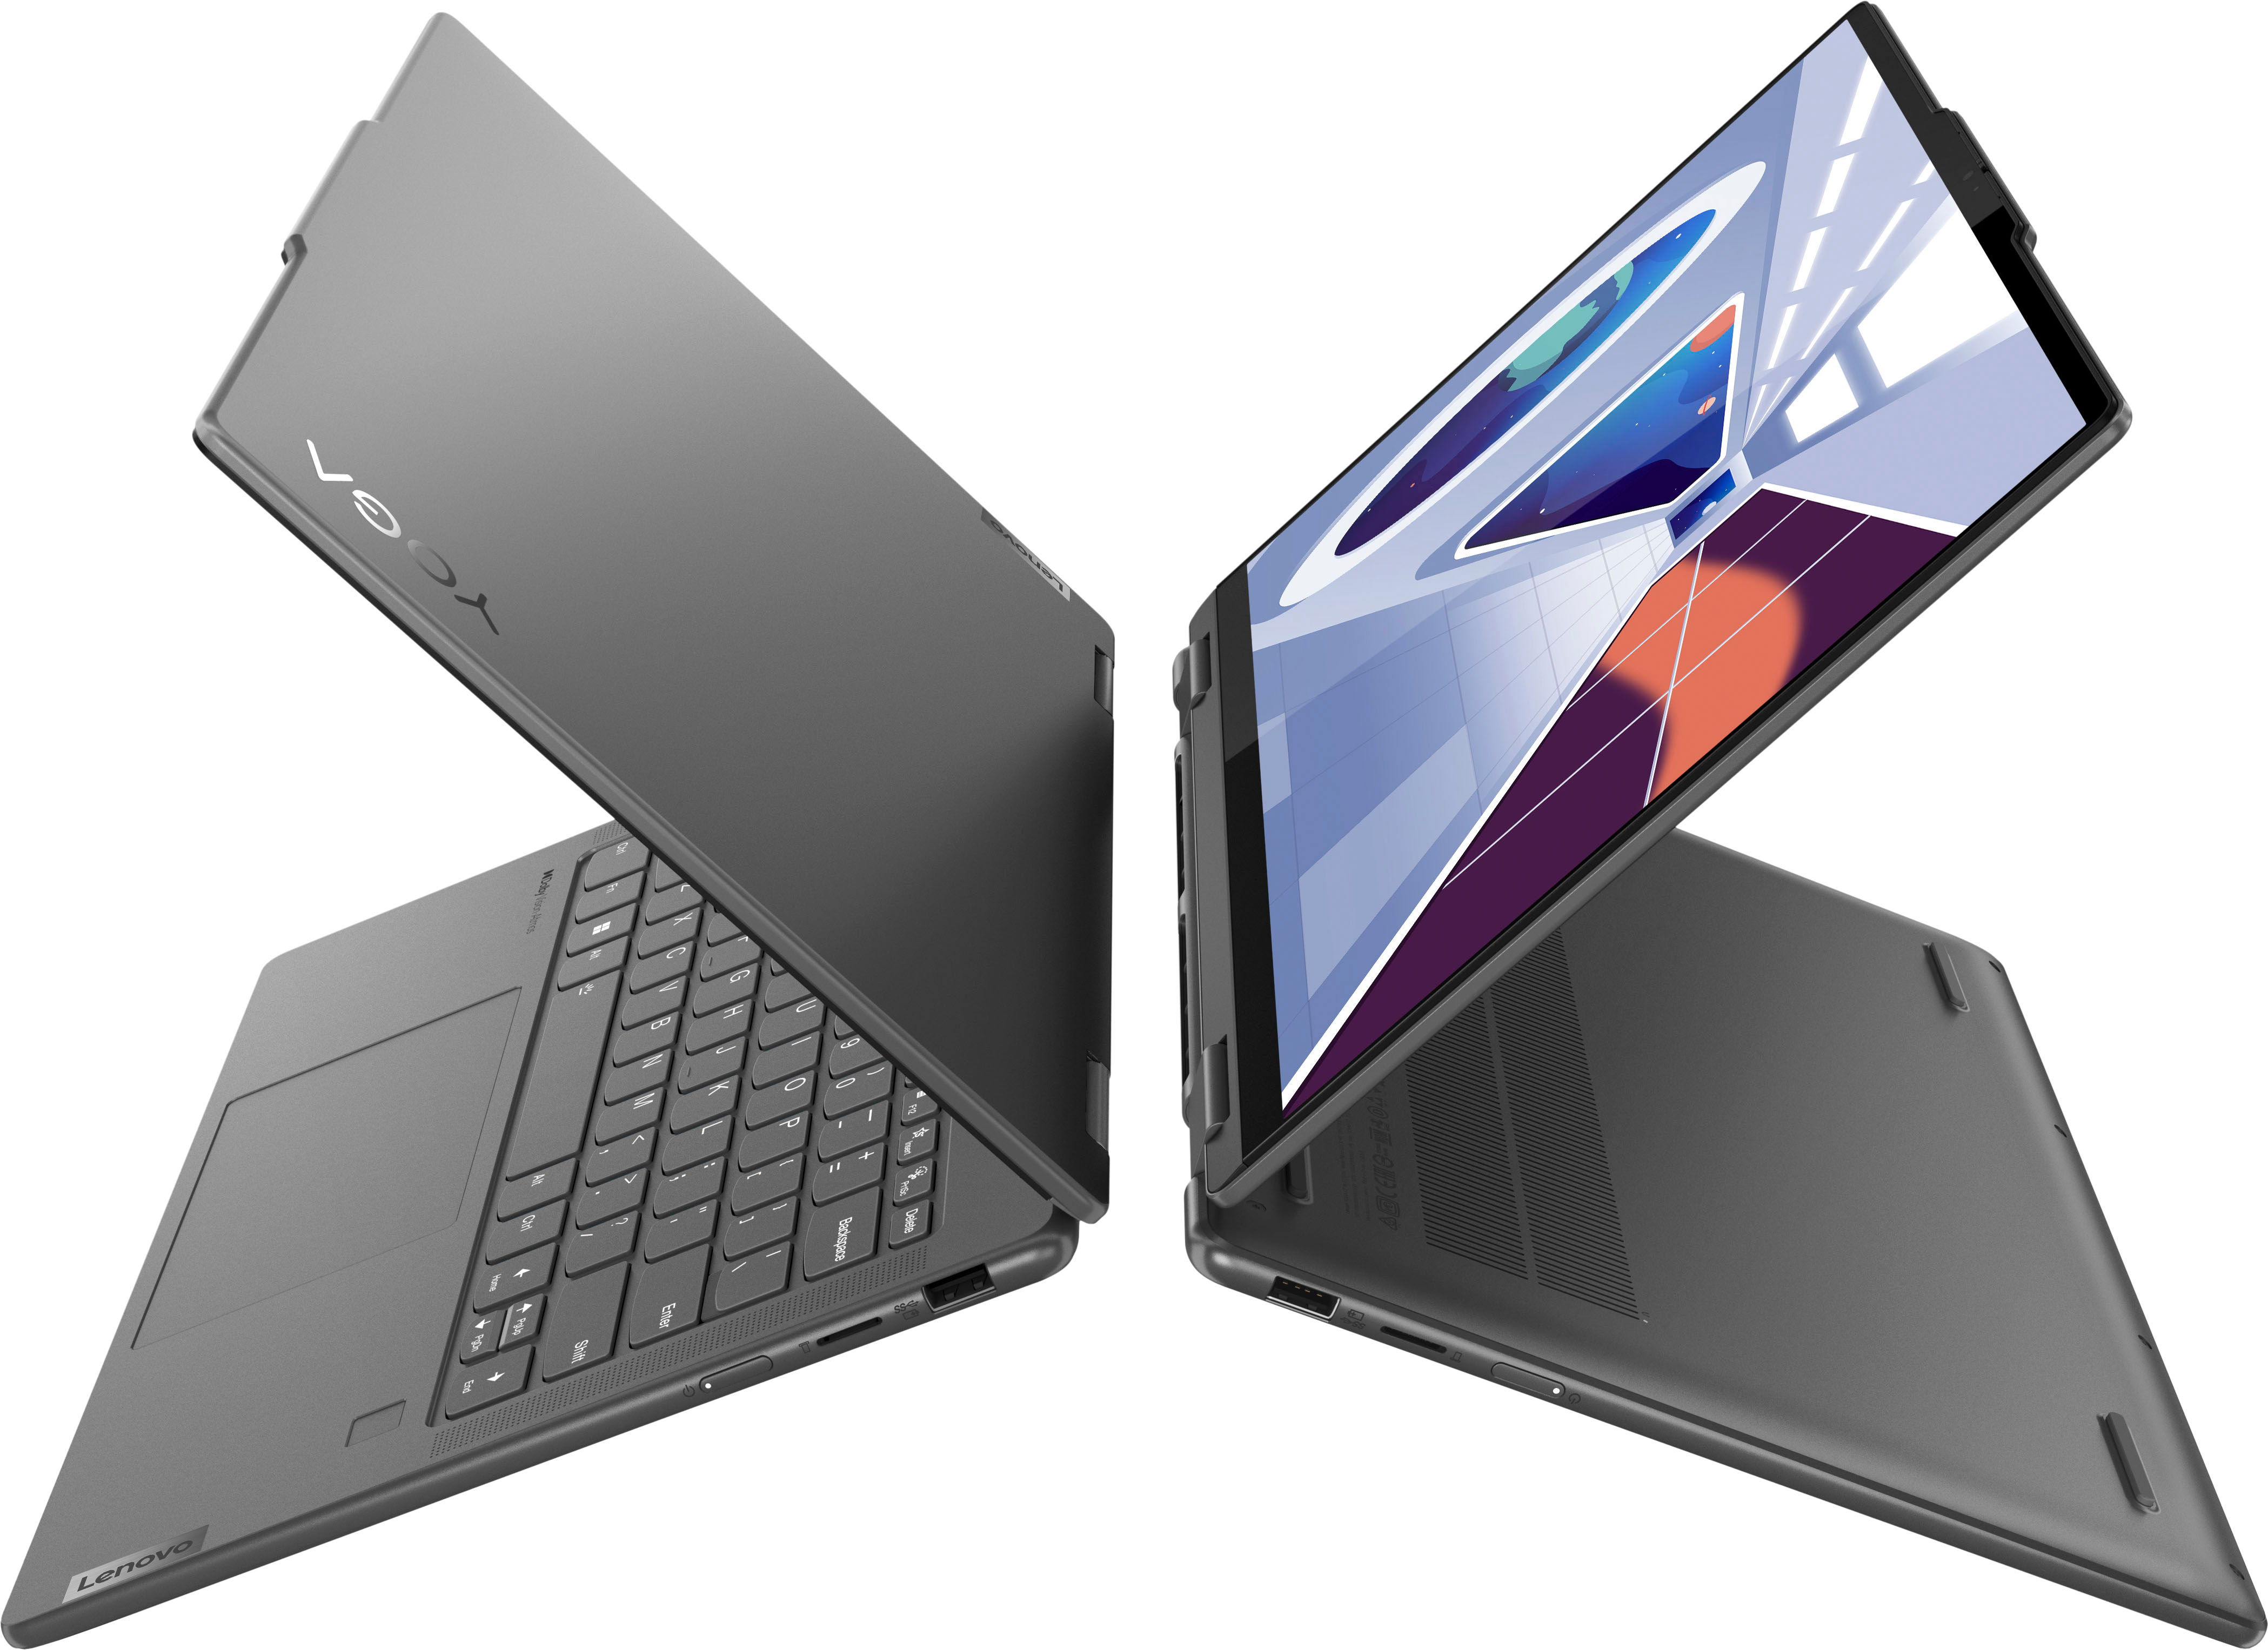 Yoga 7i (14 Intel) 2 in 1 Laptop